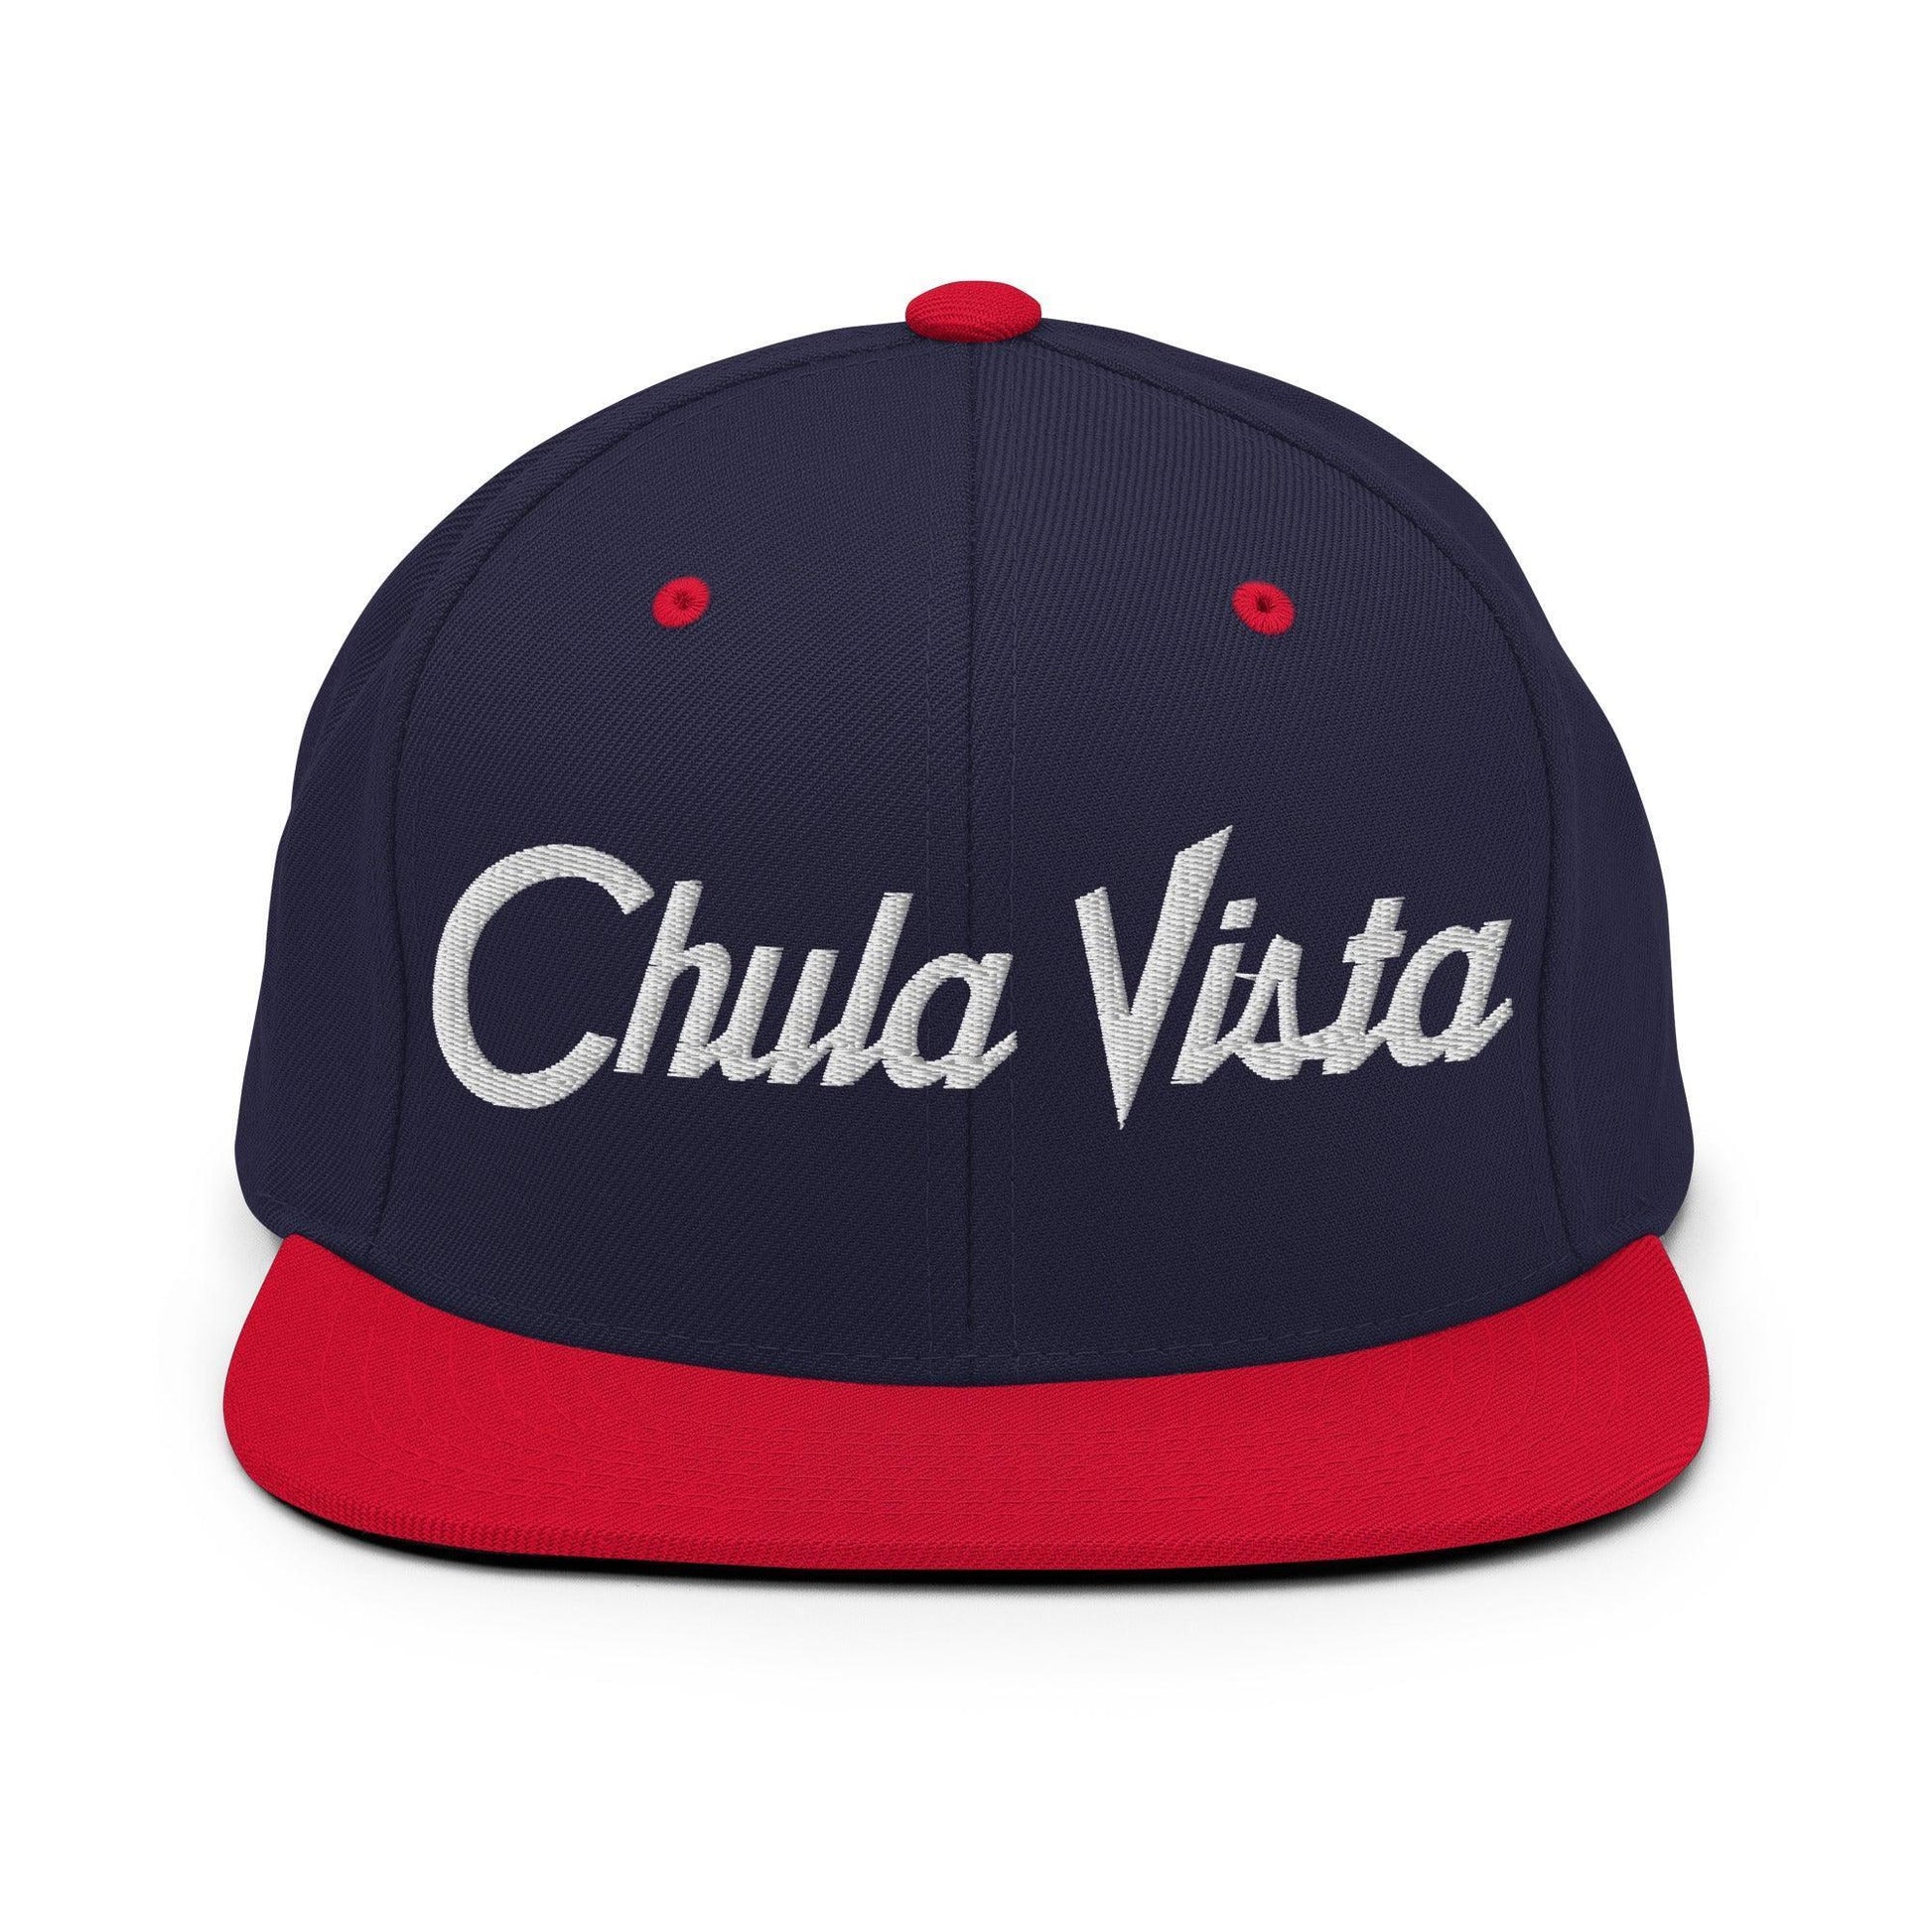 Chula Vista Script Snapback Hat Navy/ Red